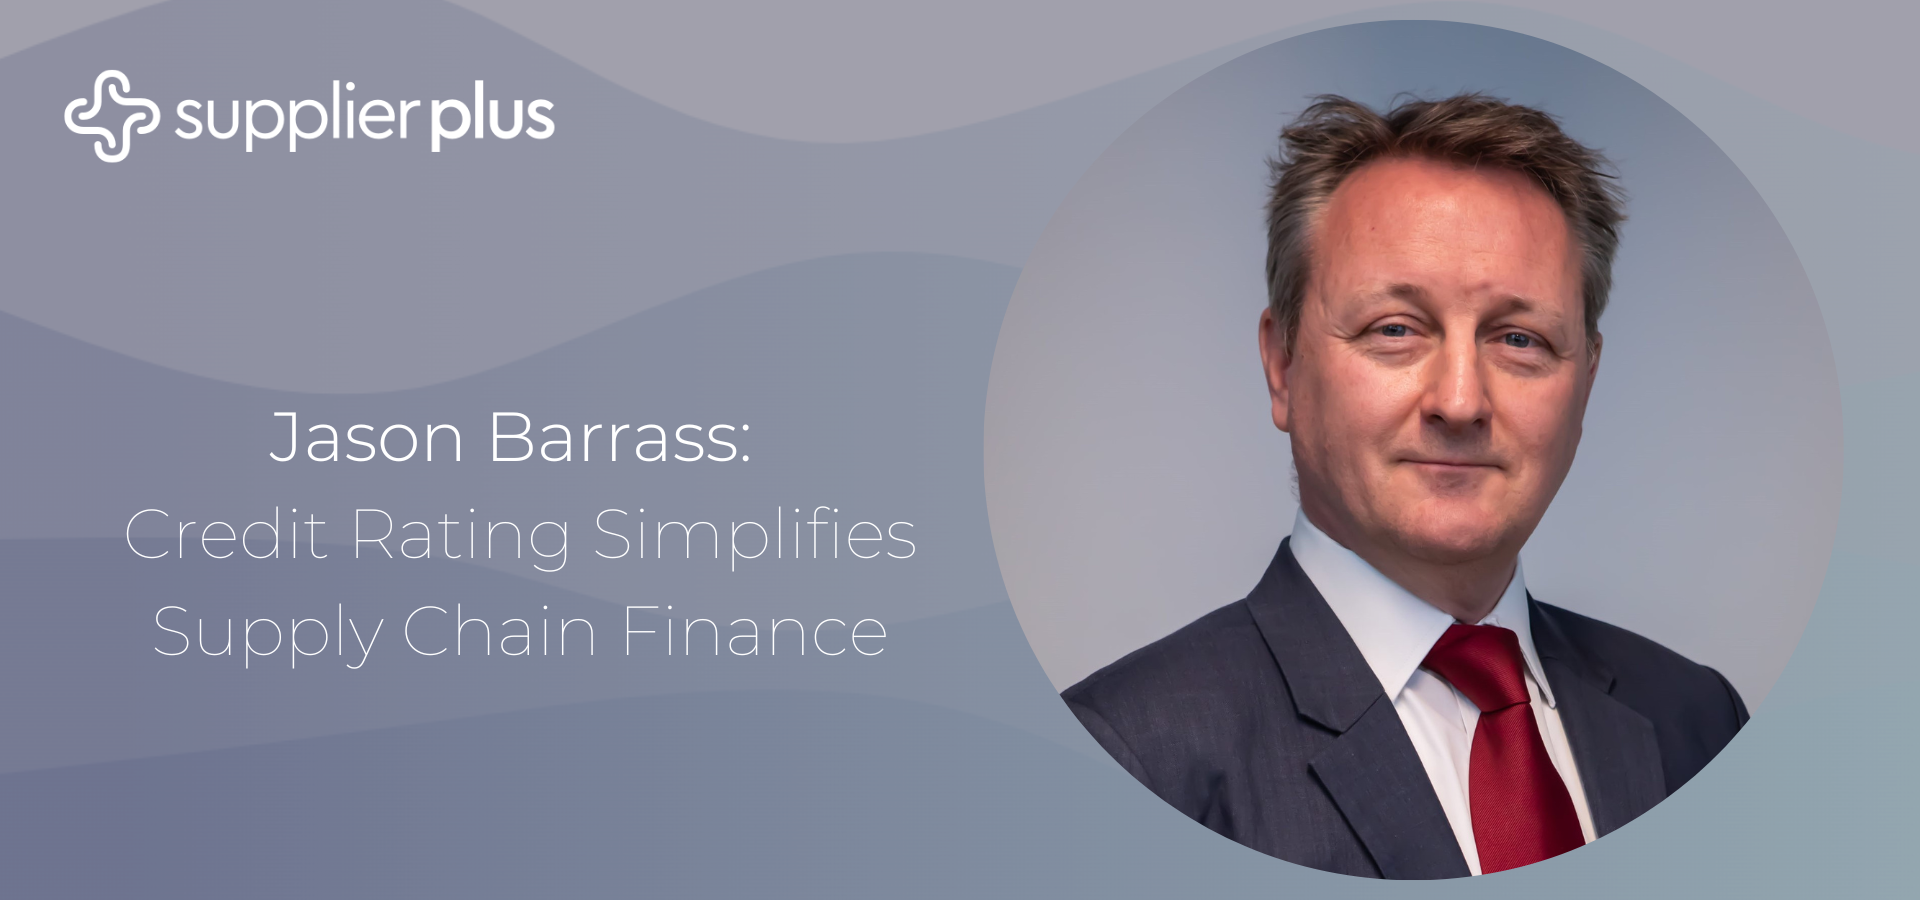 Jason Barrass: Credit Rating Simplifies Supply Chain Finance